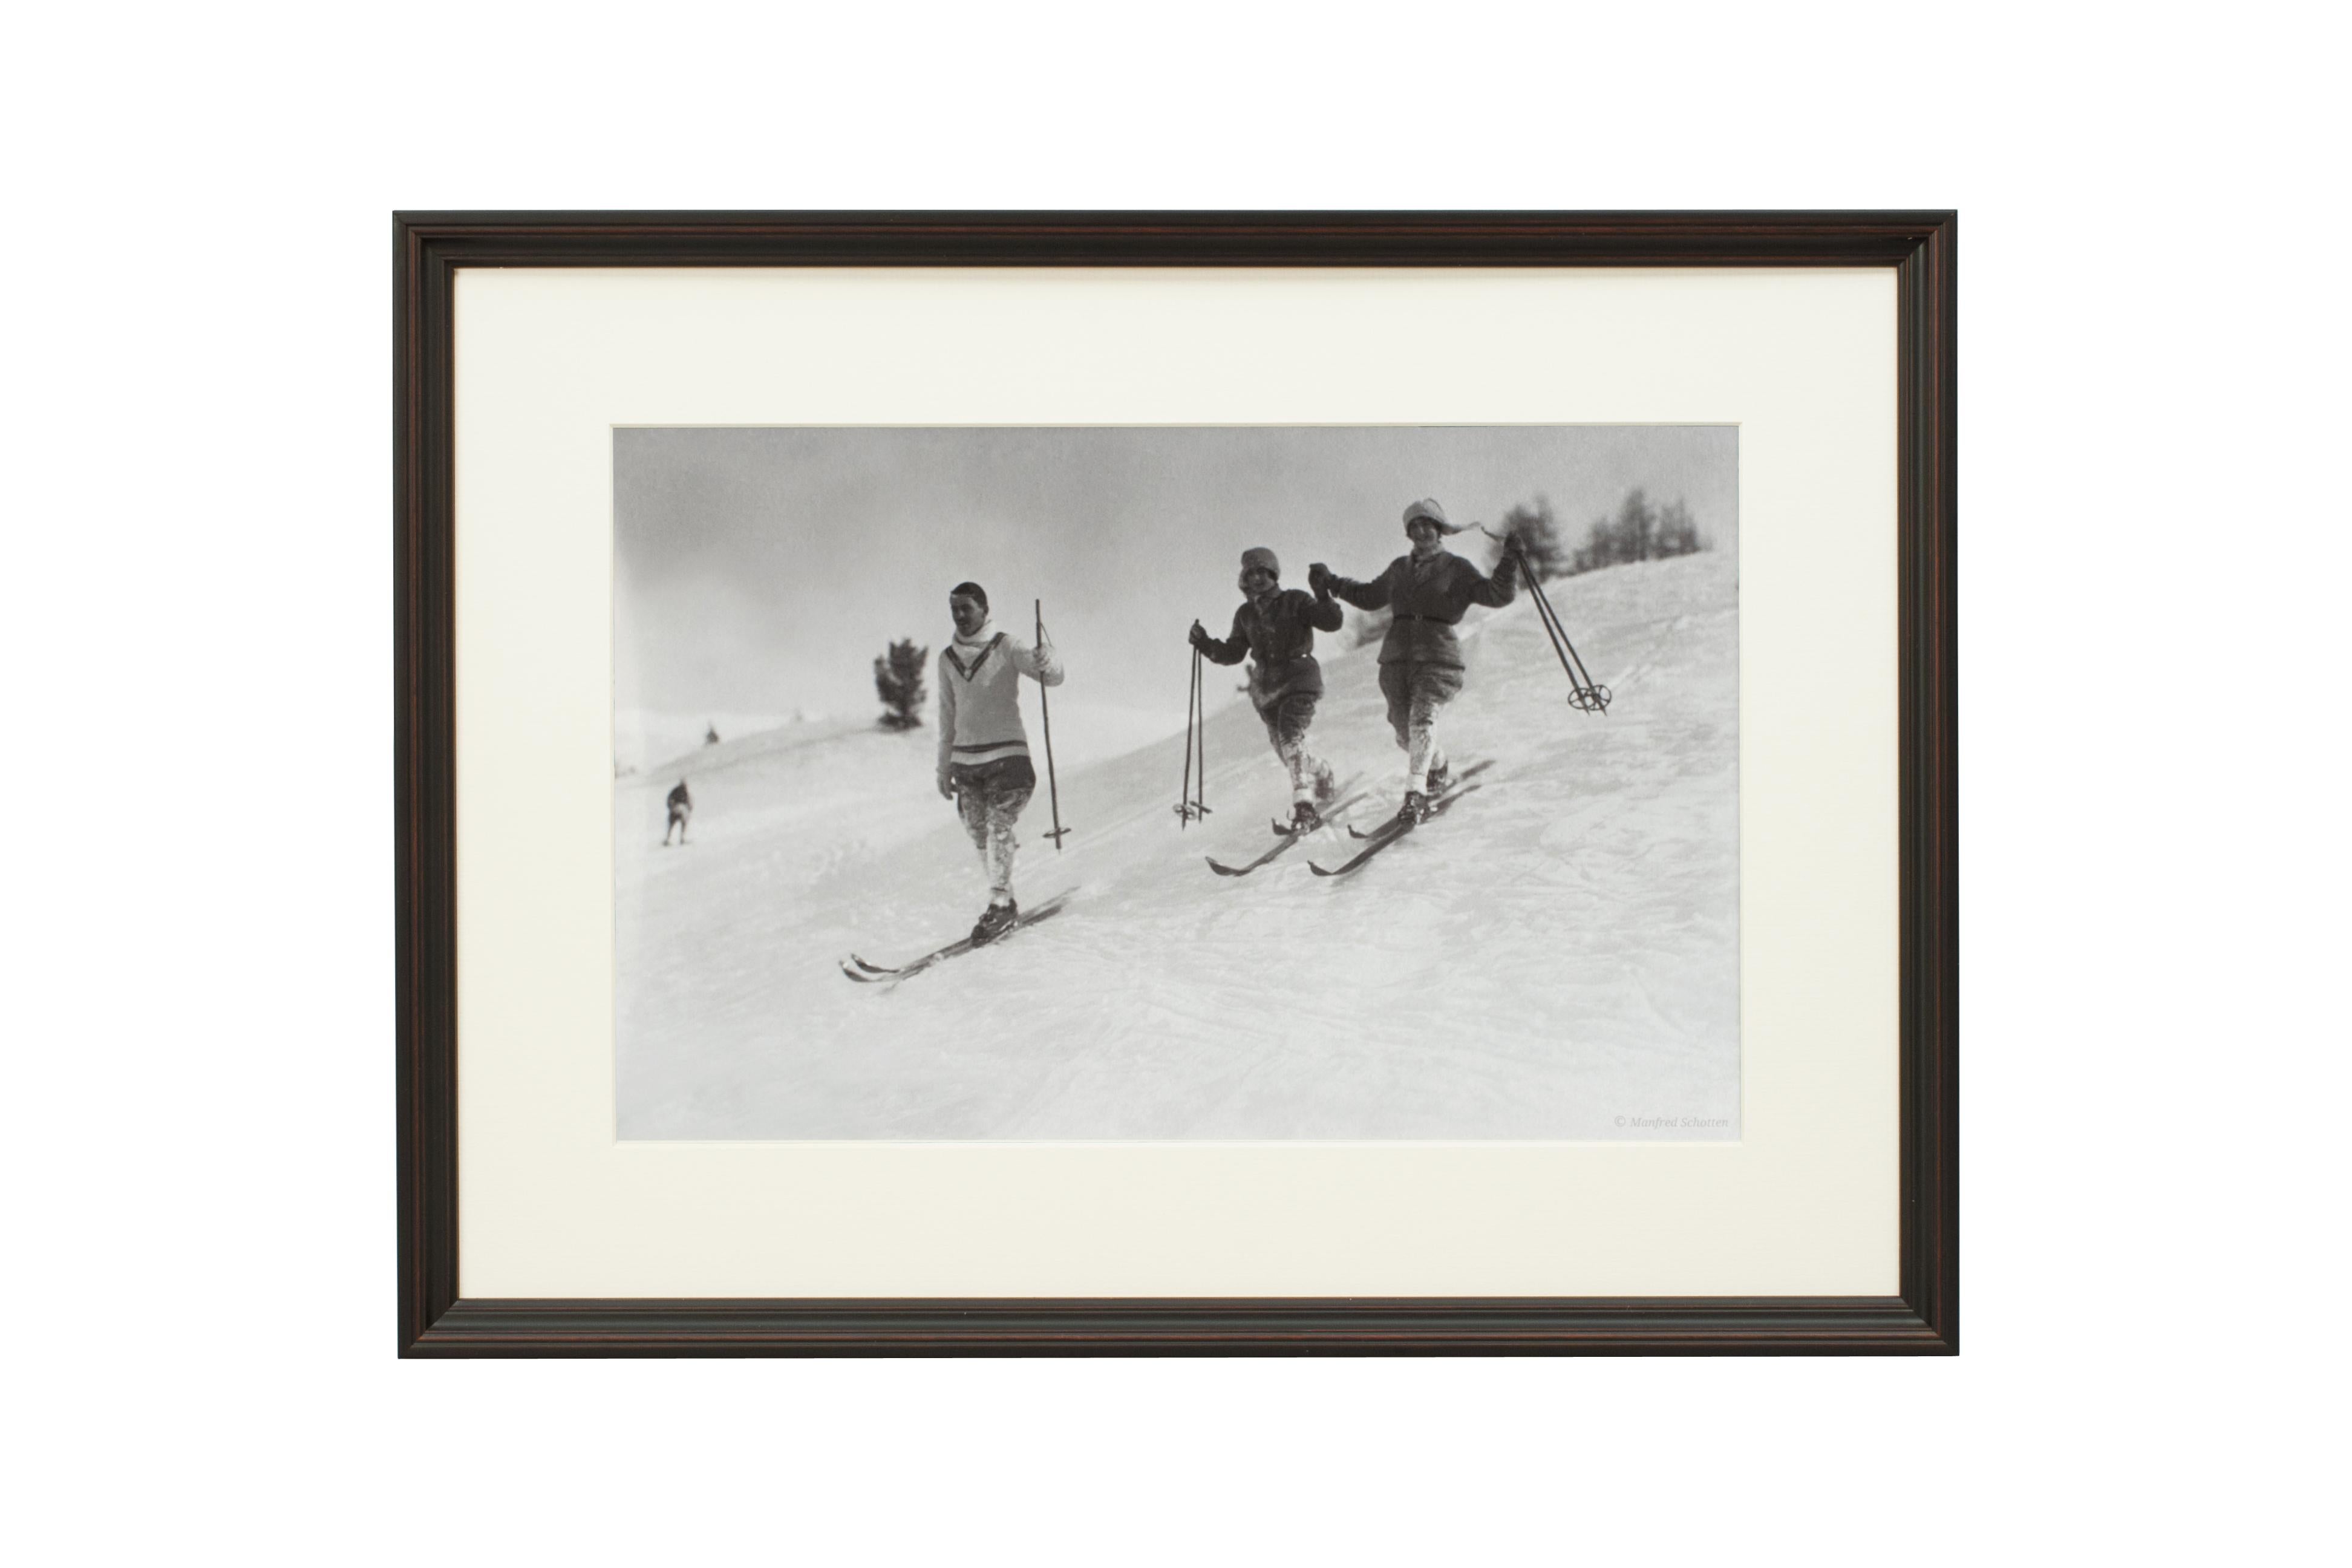 Paper Alpine Ski Photograph, 'St. Moritz' Taken from Original 1930s Photograph For Sale